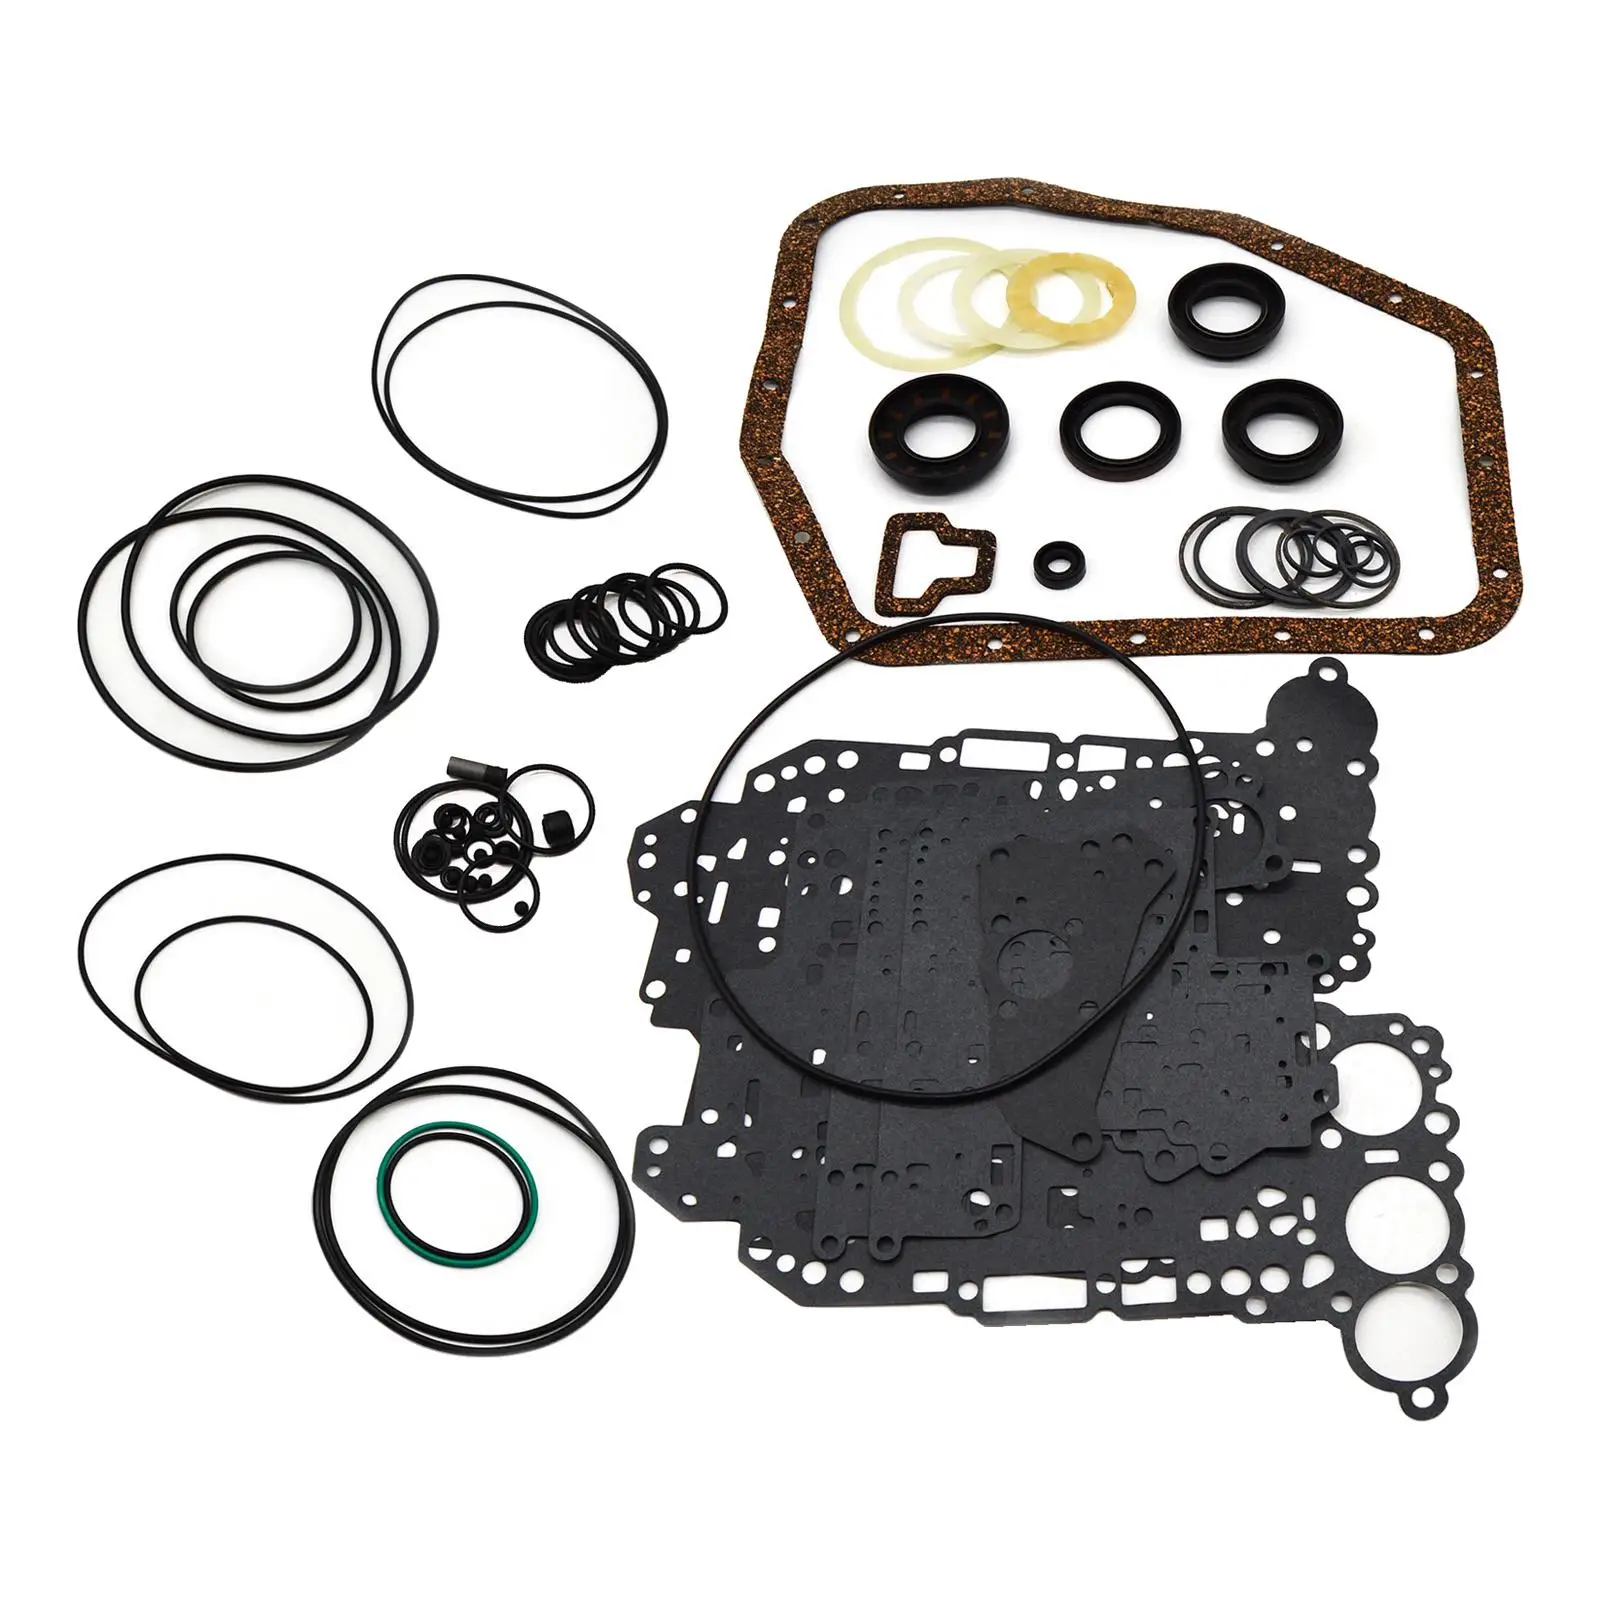 Overhaul Rebuild Kit Rebuild Pistons Accessories for MR2